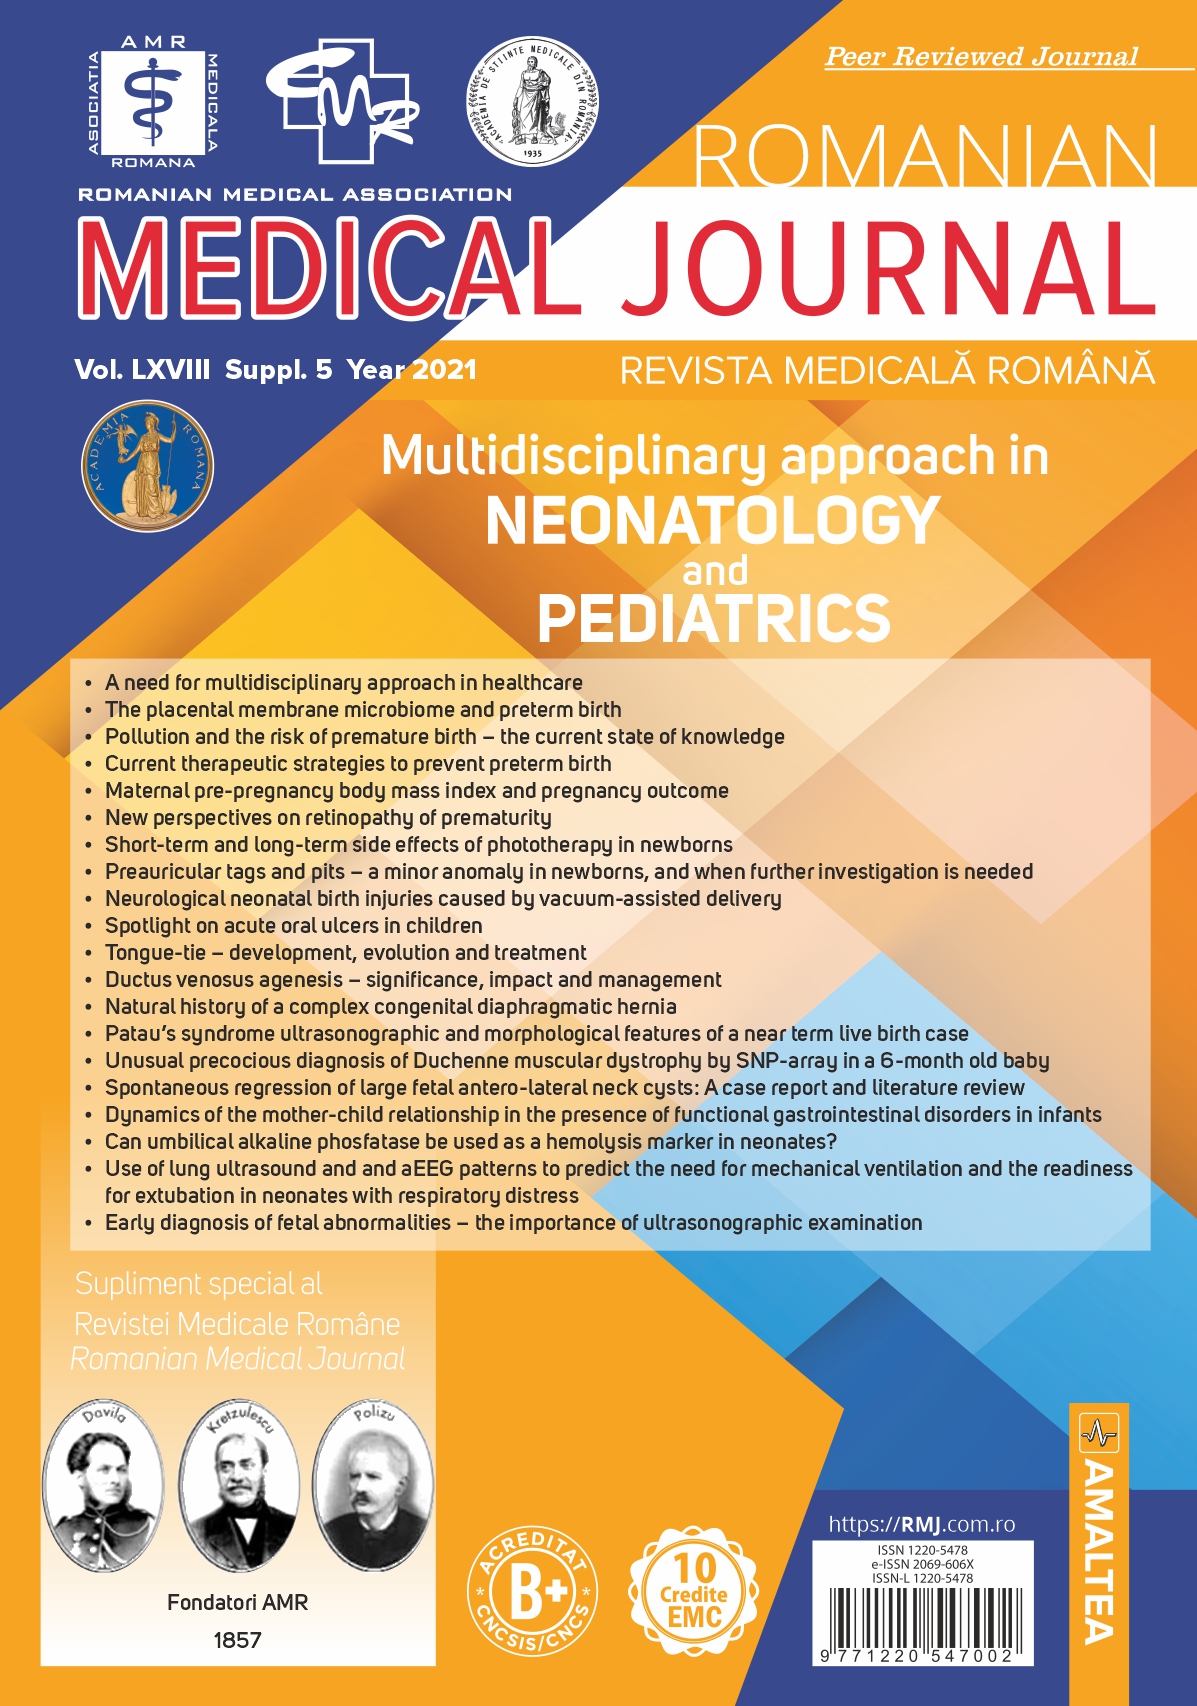 Romanian Medical Journal - REVISTA MEDICALA ROMANA, Vol. LXVIII, Suppl. 5, Year 2021